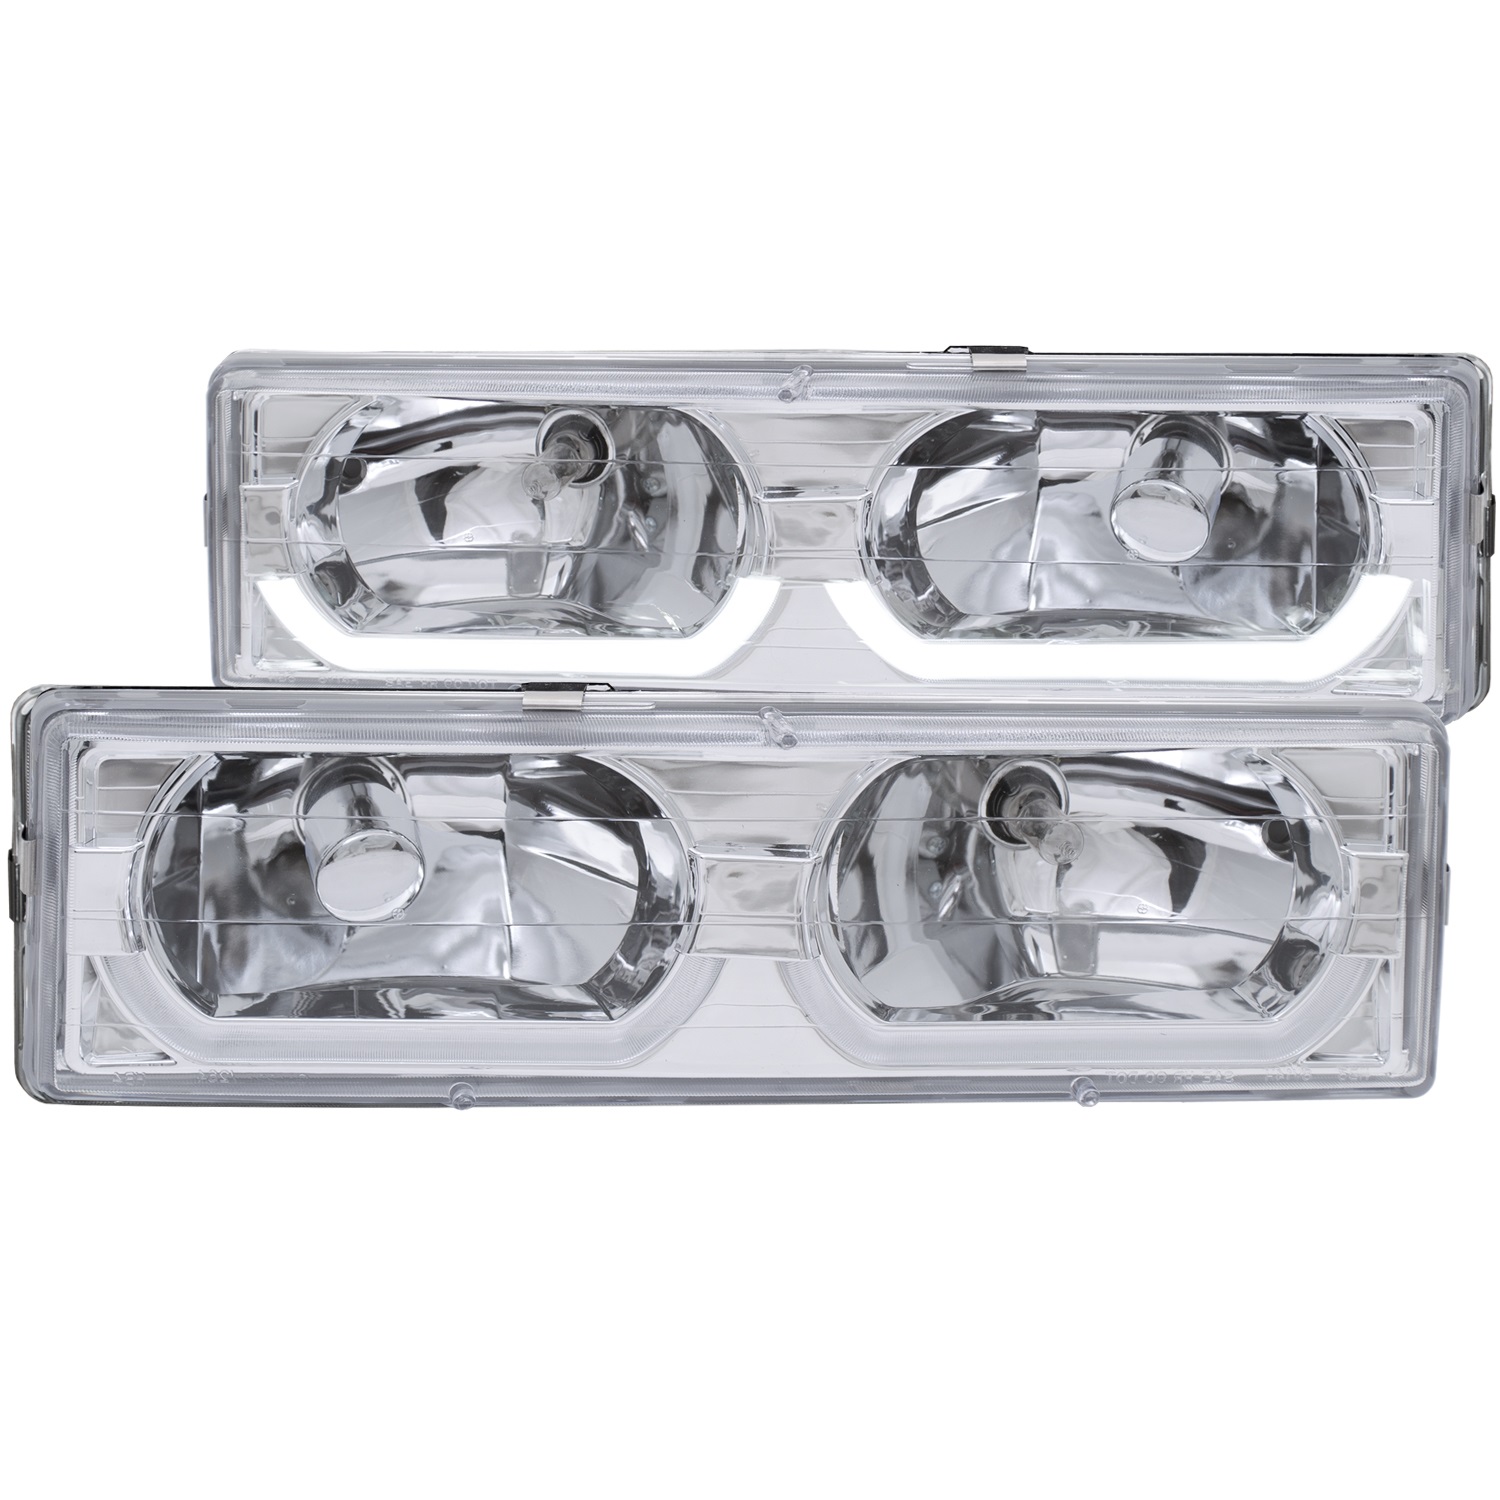 AnzoUSA Anzo USA 111300 Crystal Headlight Set